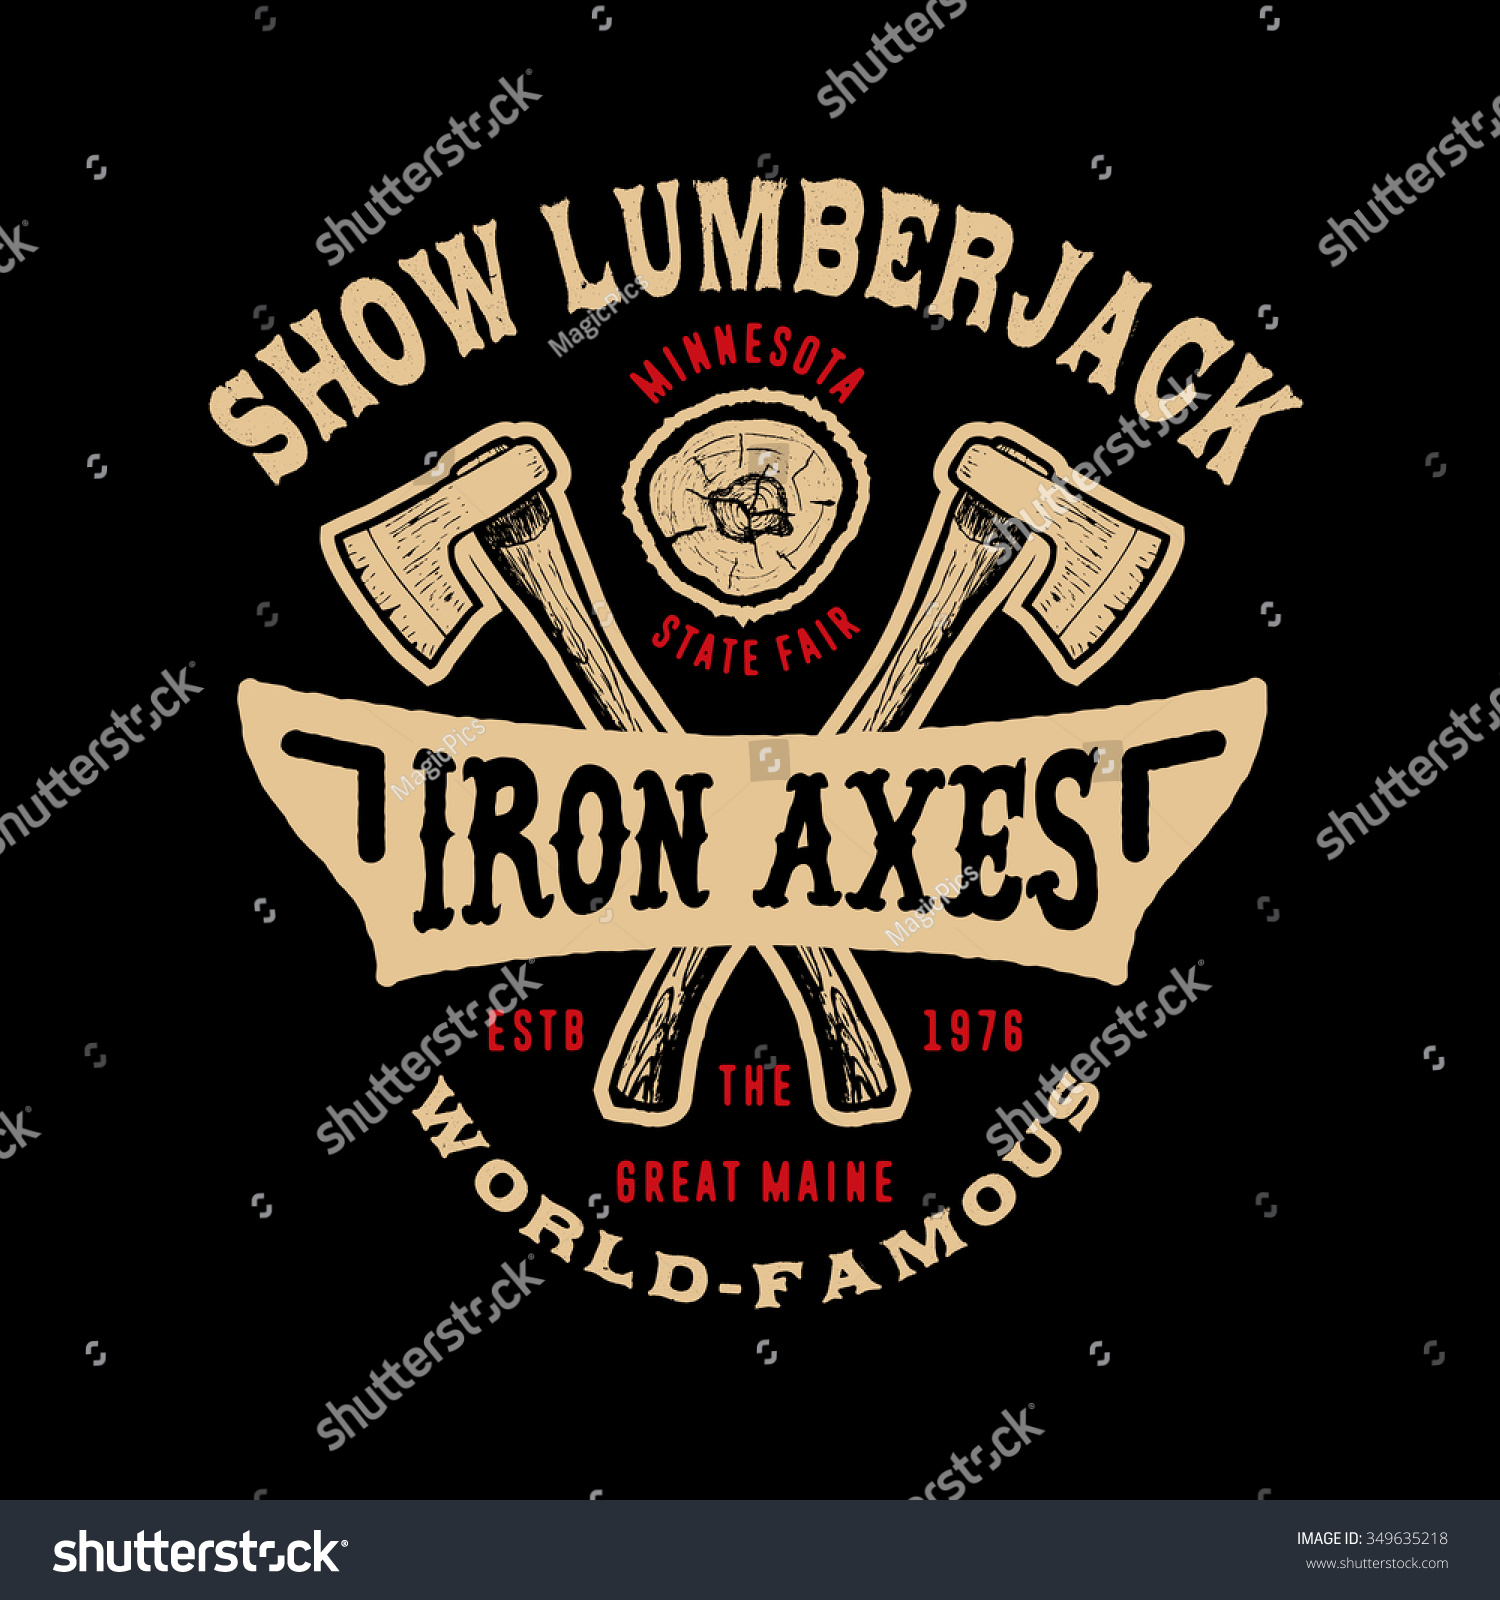 SVG of 77 SHOW LUMBERJACK. Handmade IRON axeS retro style. Design fashion apparel  print. T shirt graphic vintage grunge vector illustration badge label logo template. 

 svg